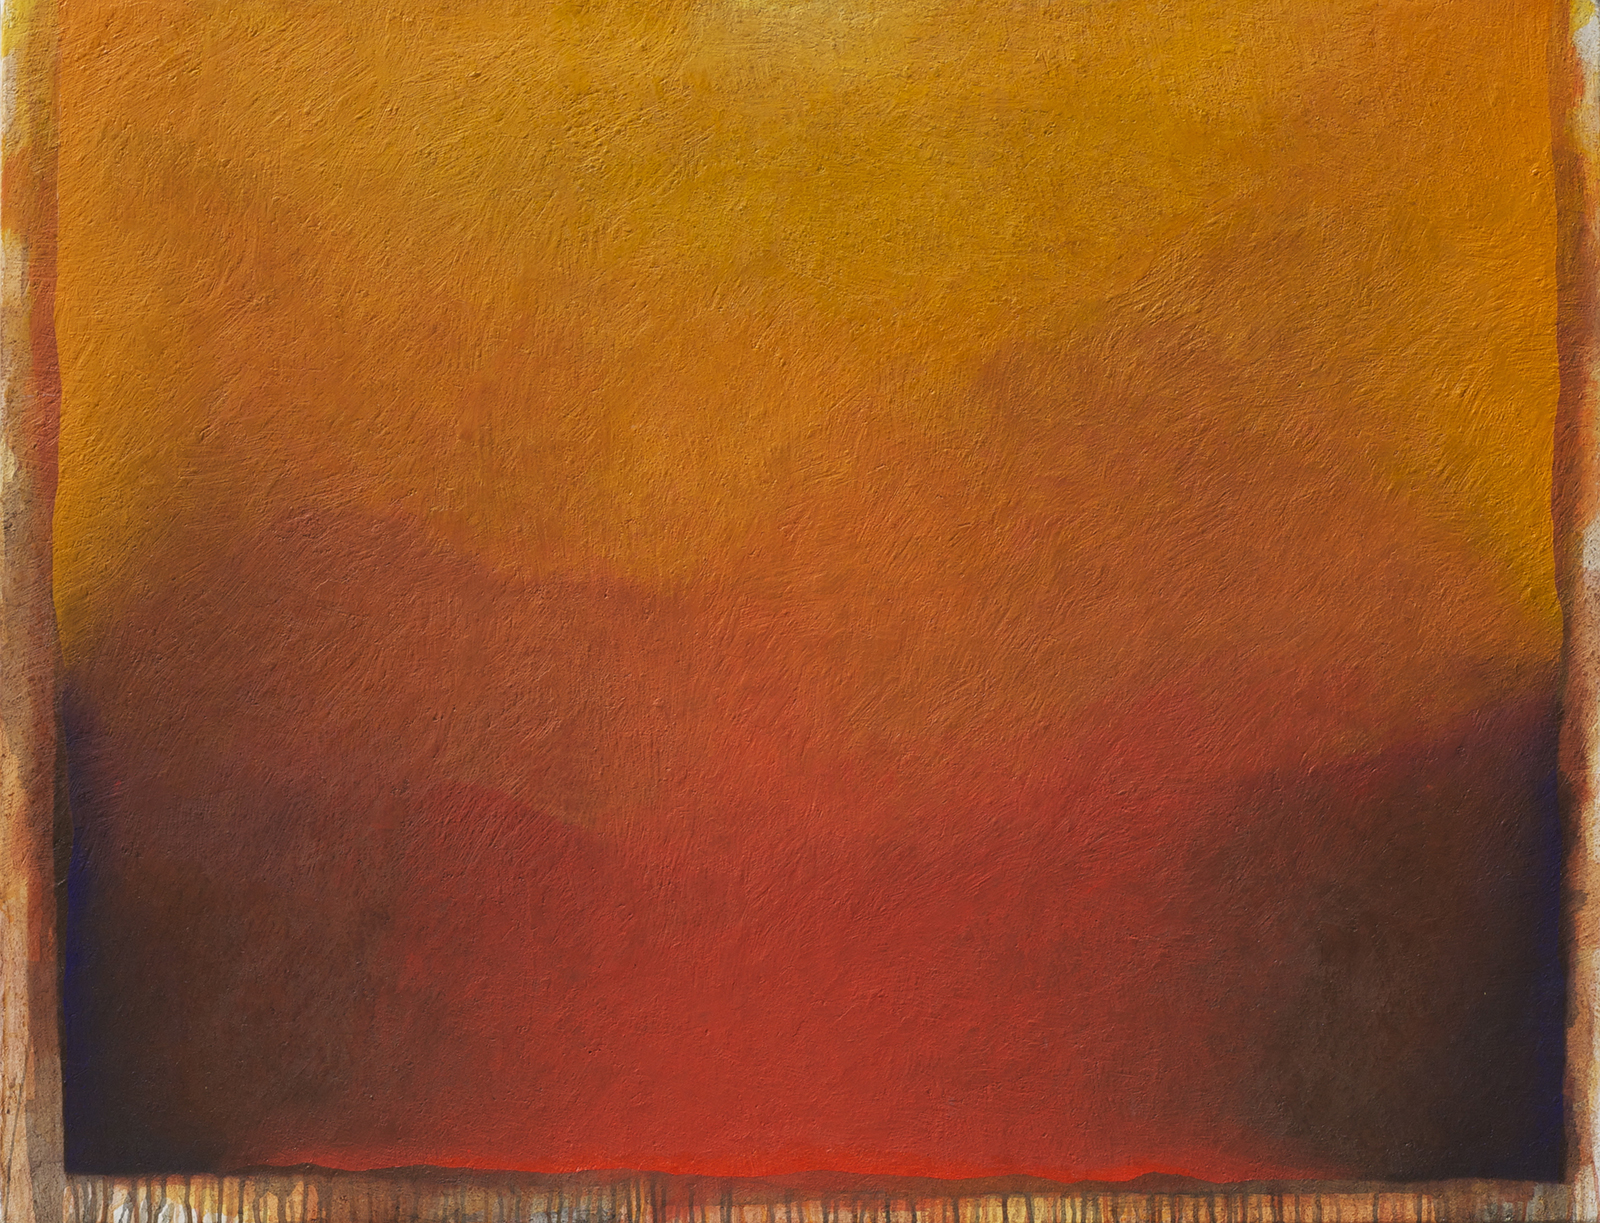 Vapori, 2010, acrilico e olio su tela, cm. 115 x 150